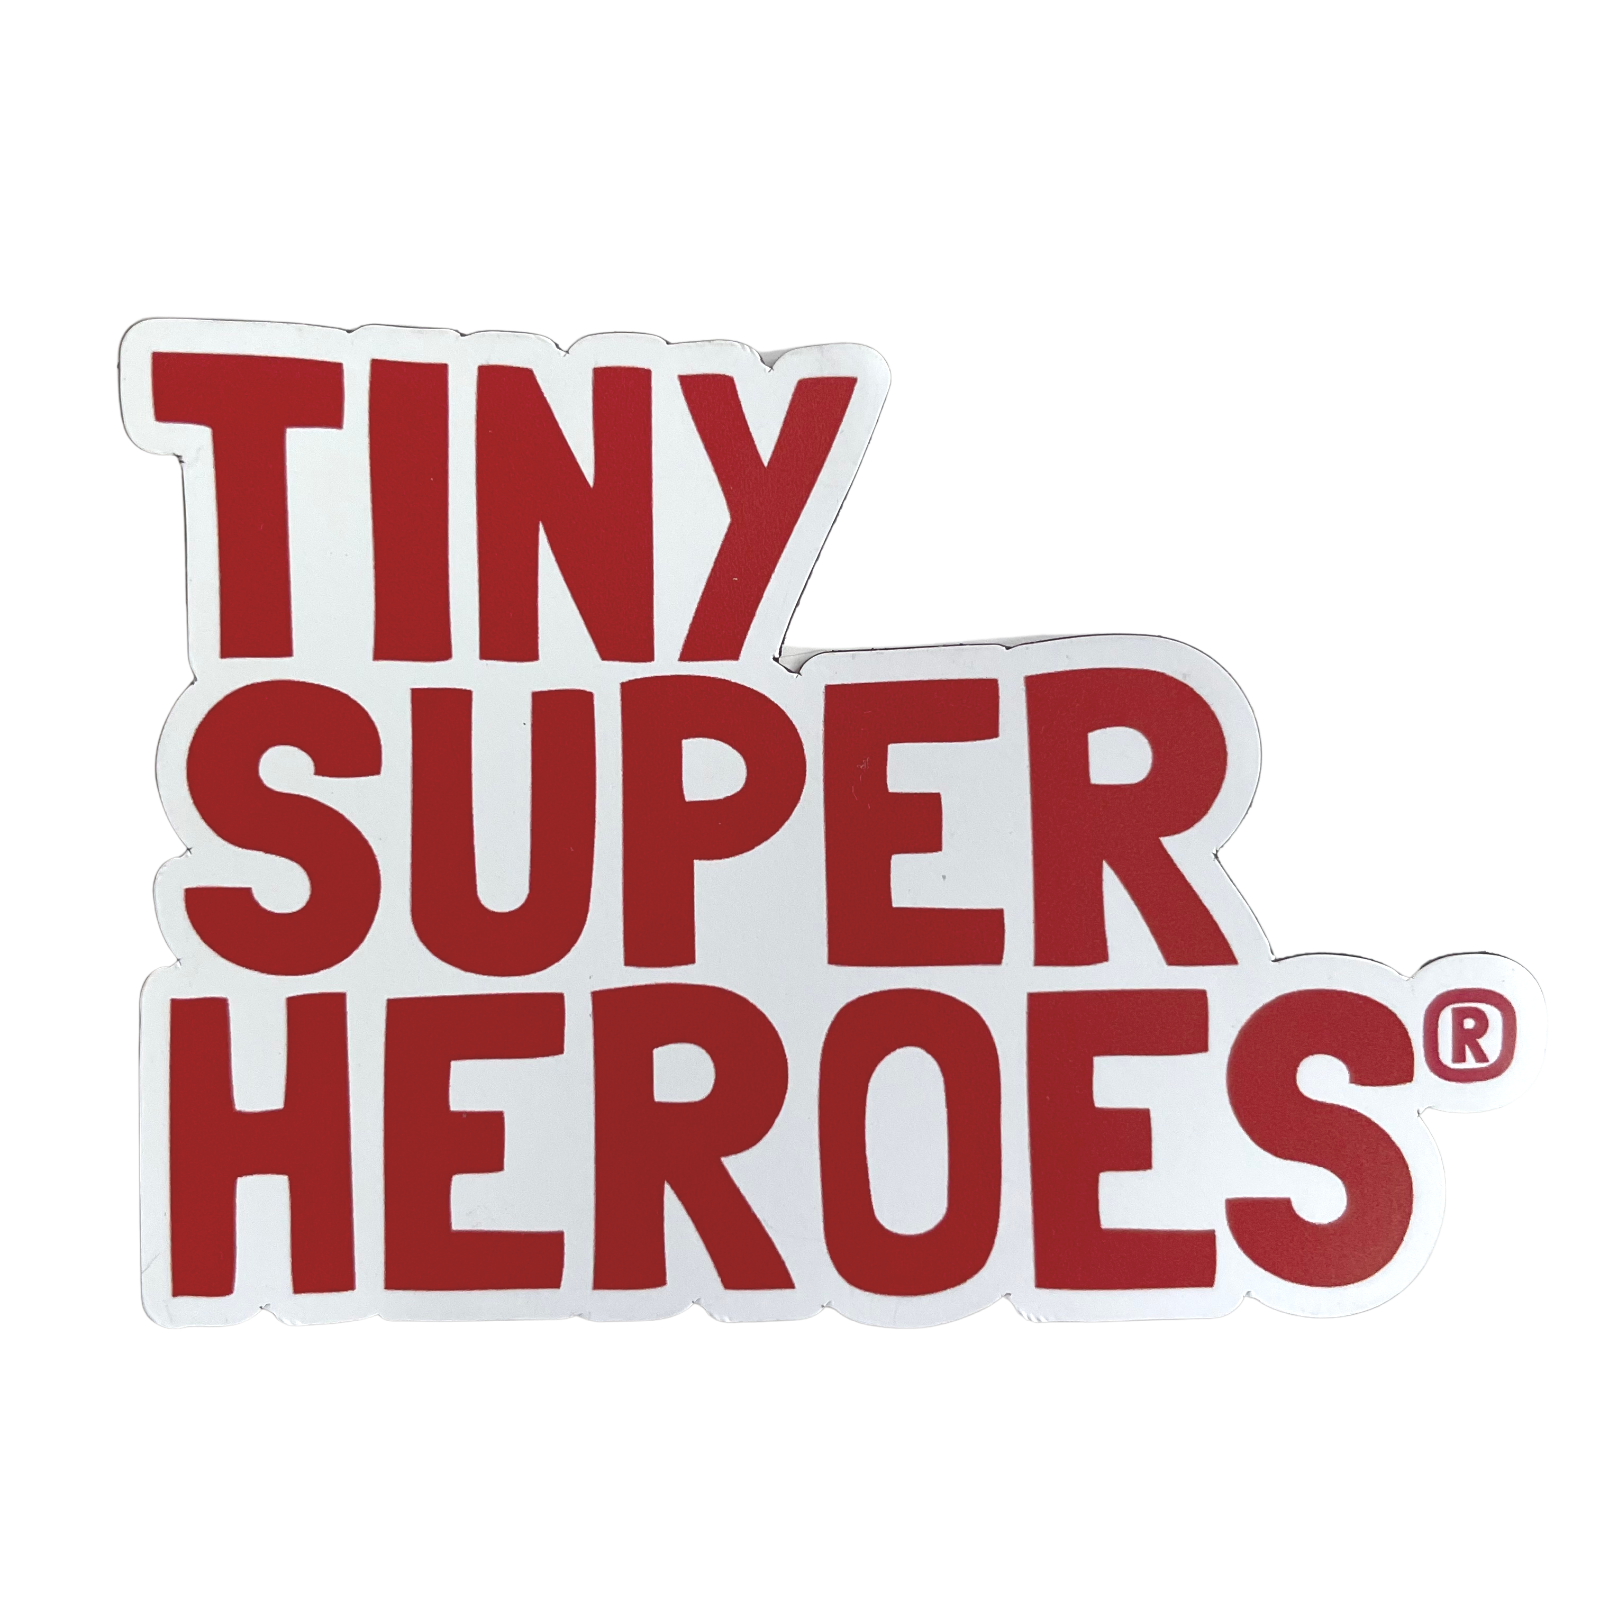 TinySuperheroes Magnet - TinySuperheroes